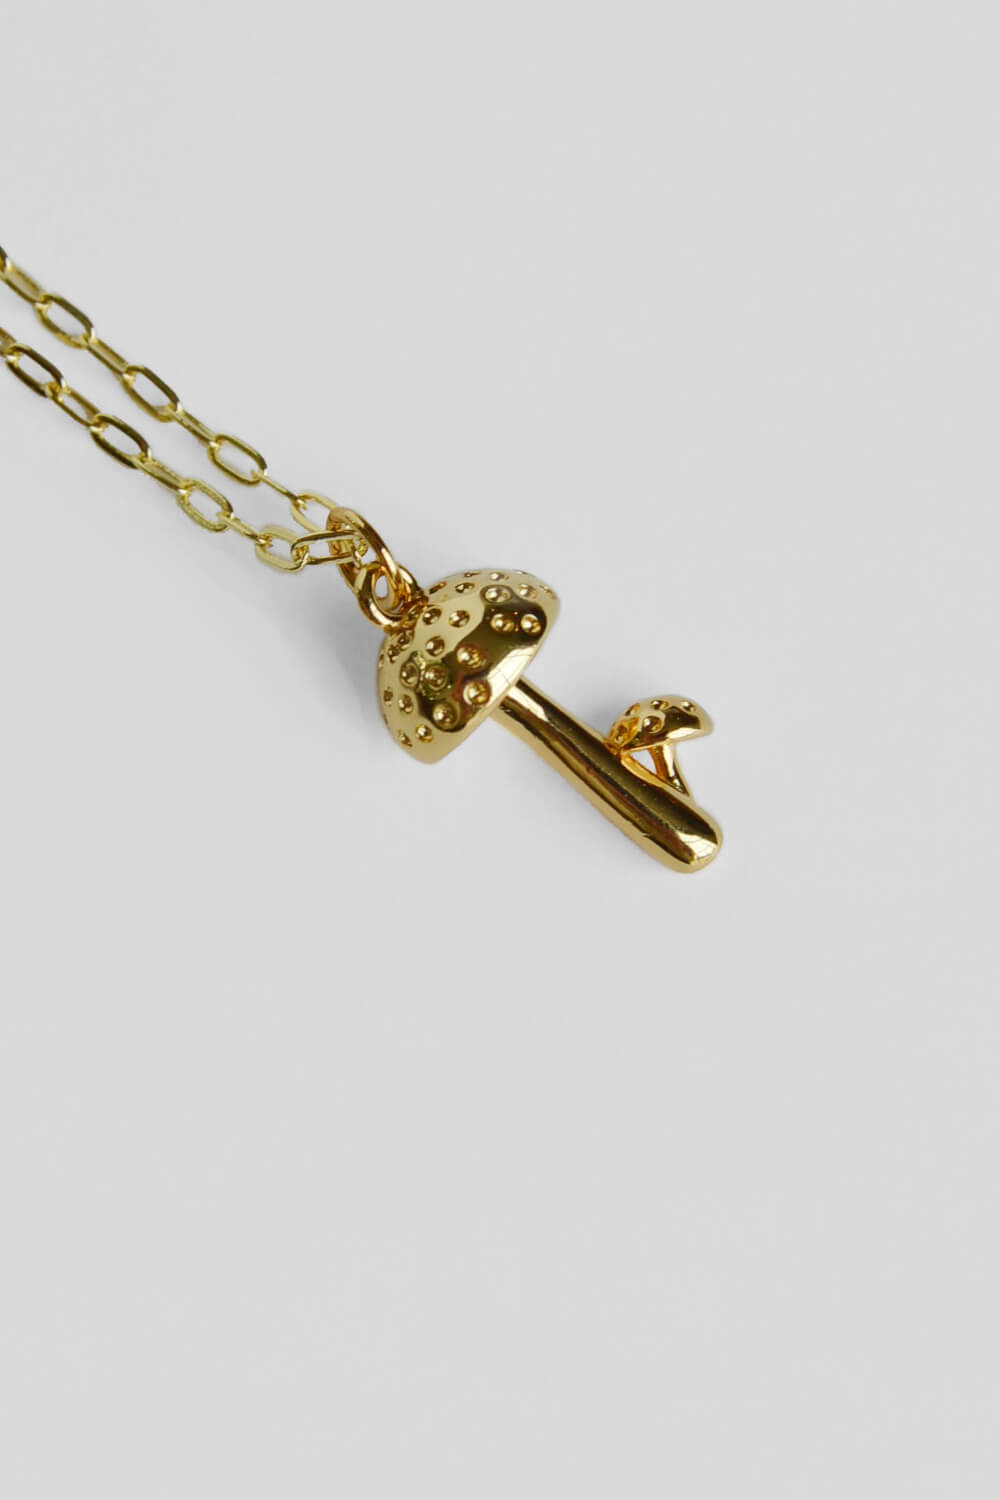 wild mushroom necklace - gold